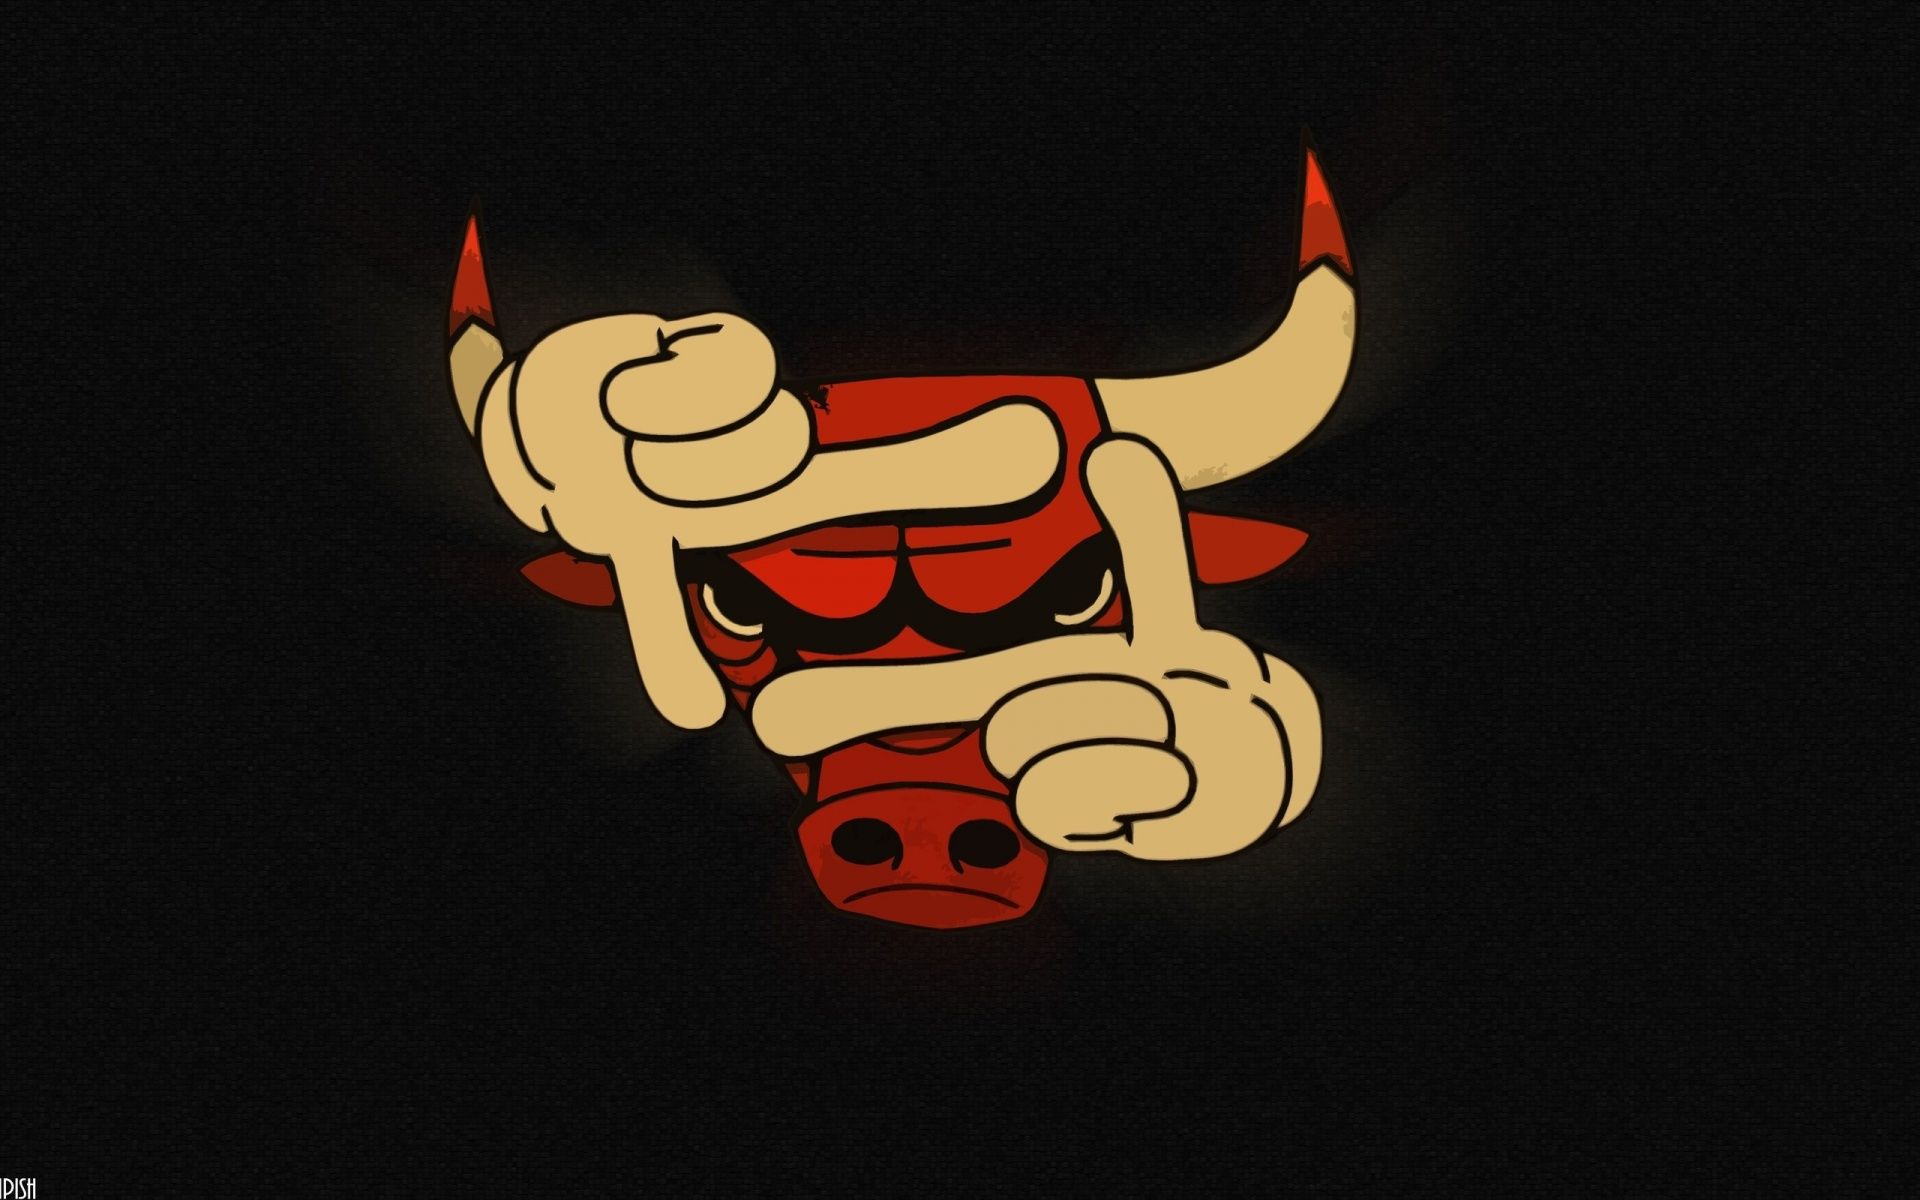 Bulls Logo Wallpaper Group